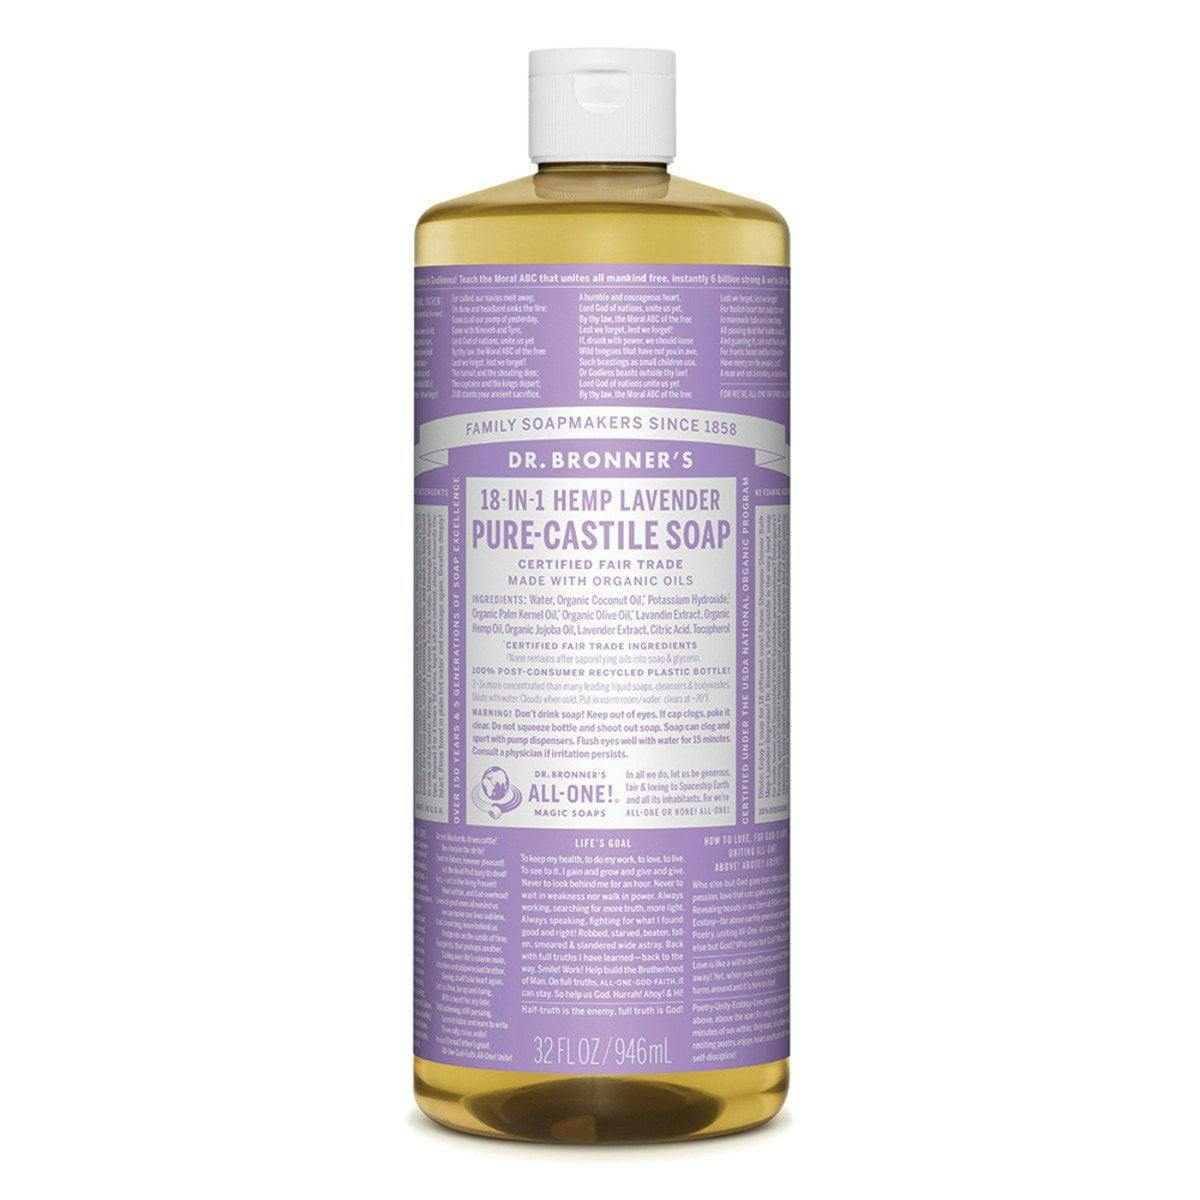 Dr. Bronner's Pure-Castile Soap Liquid Lavender 946ml